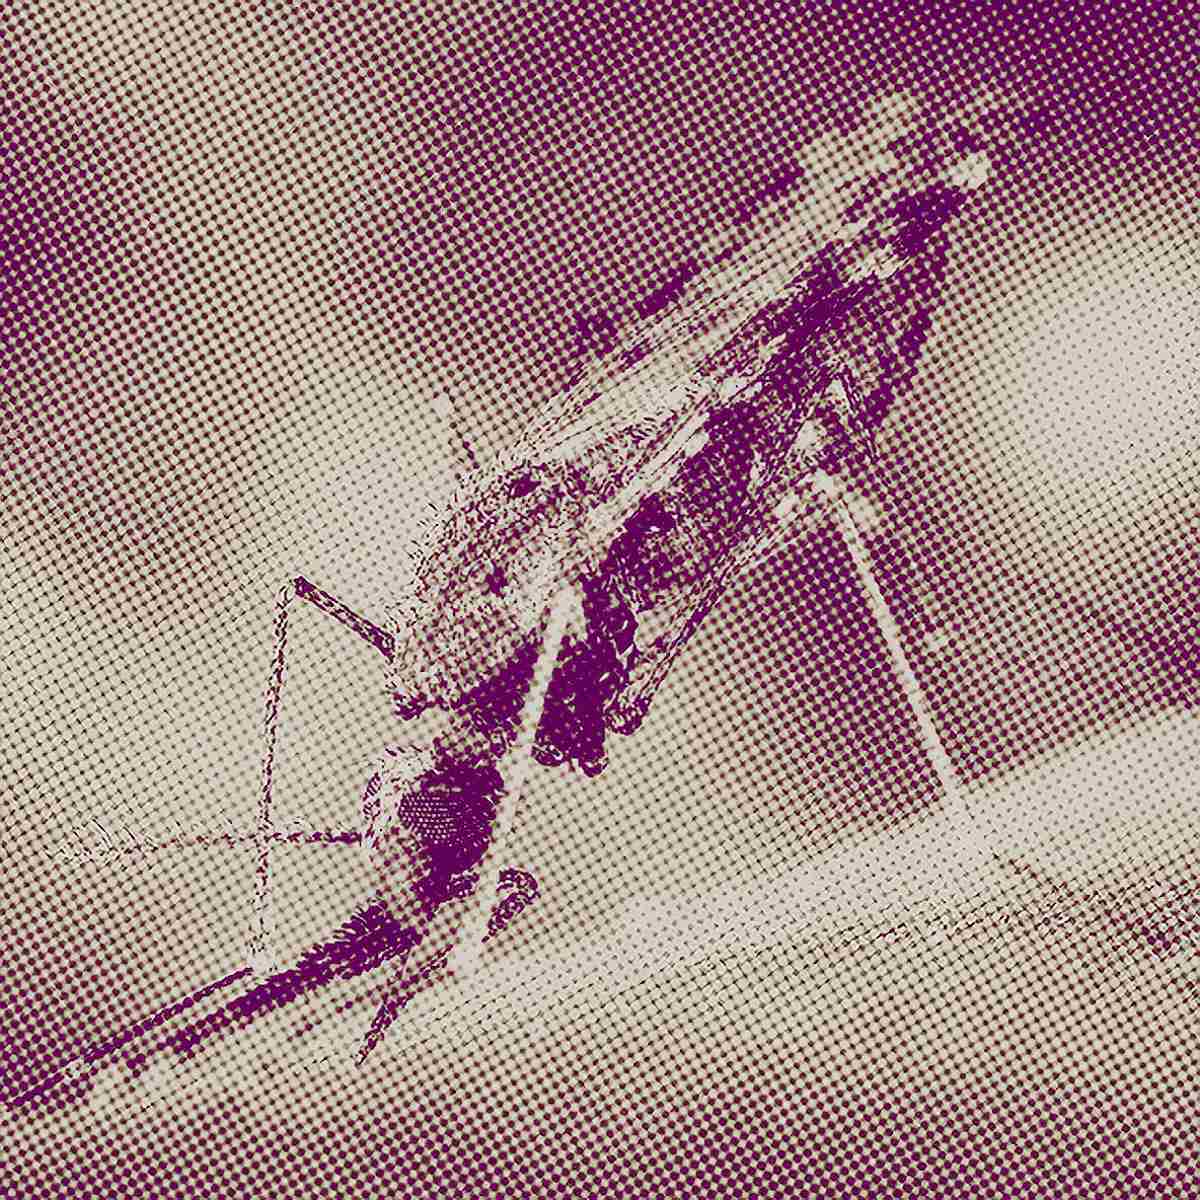 mosquito Anopheles